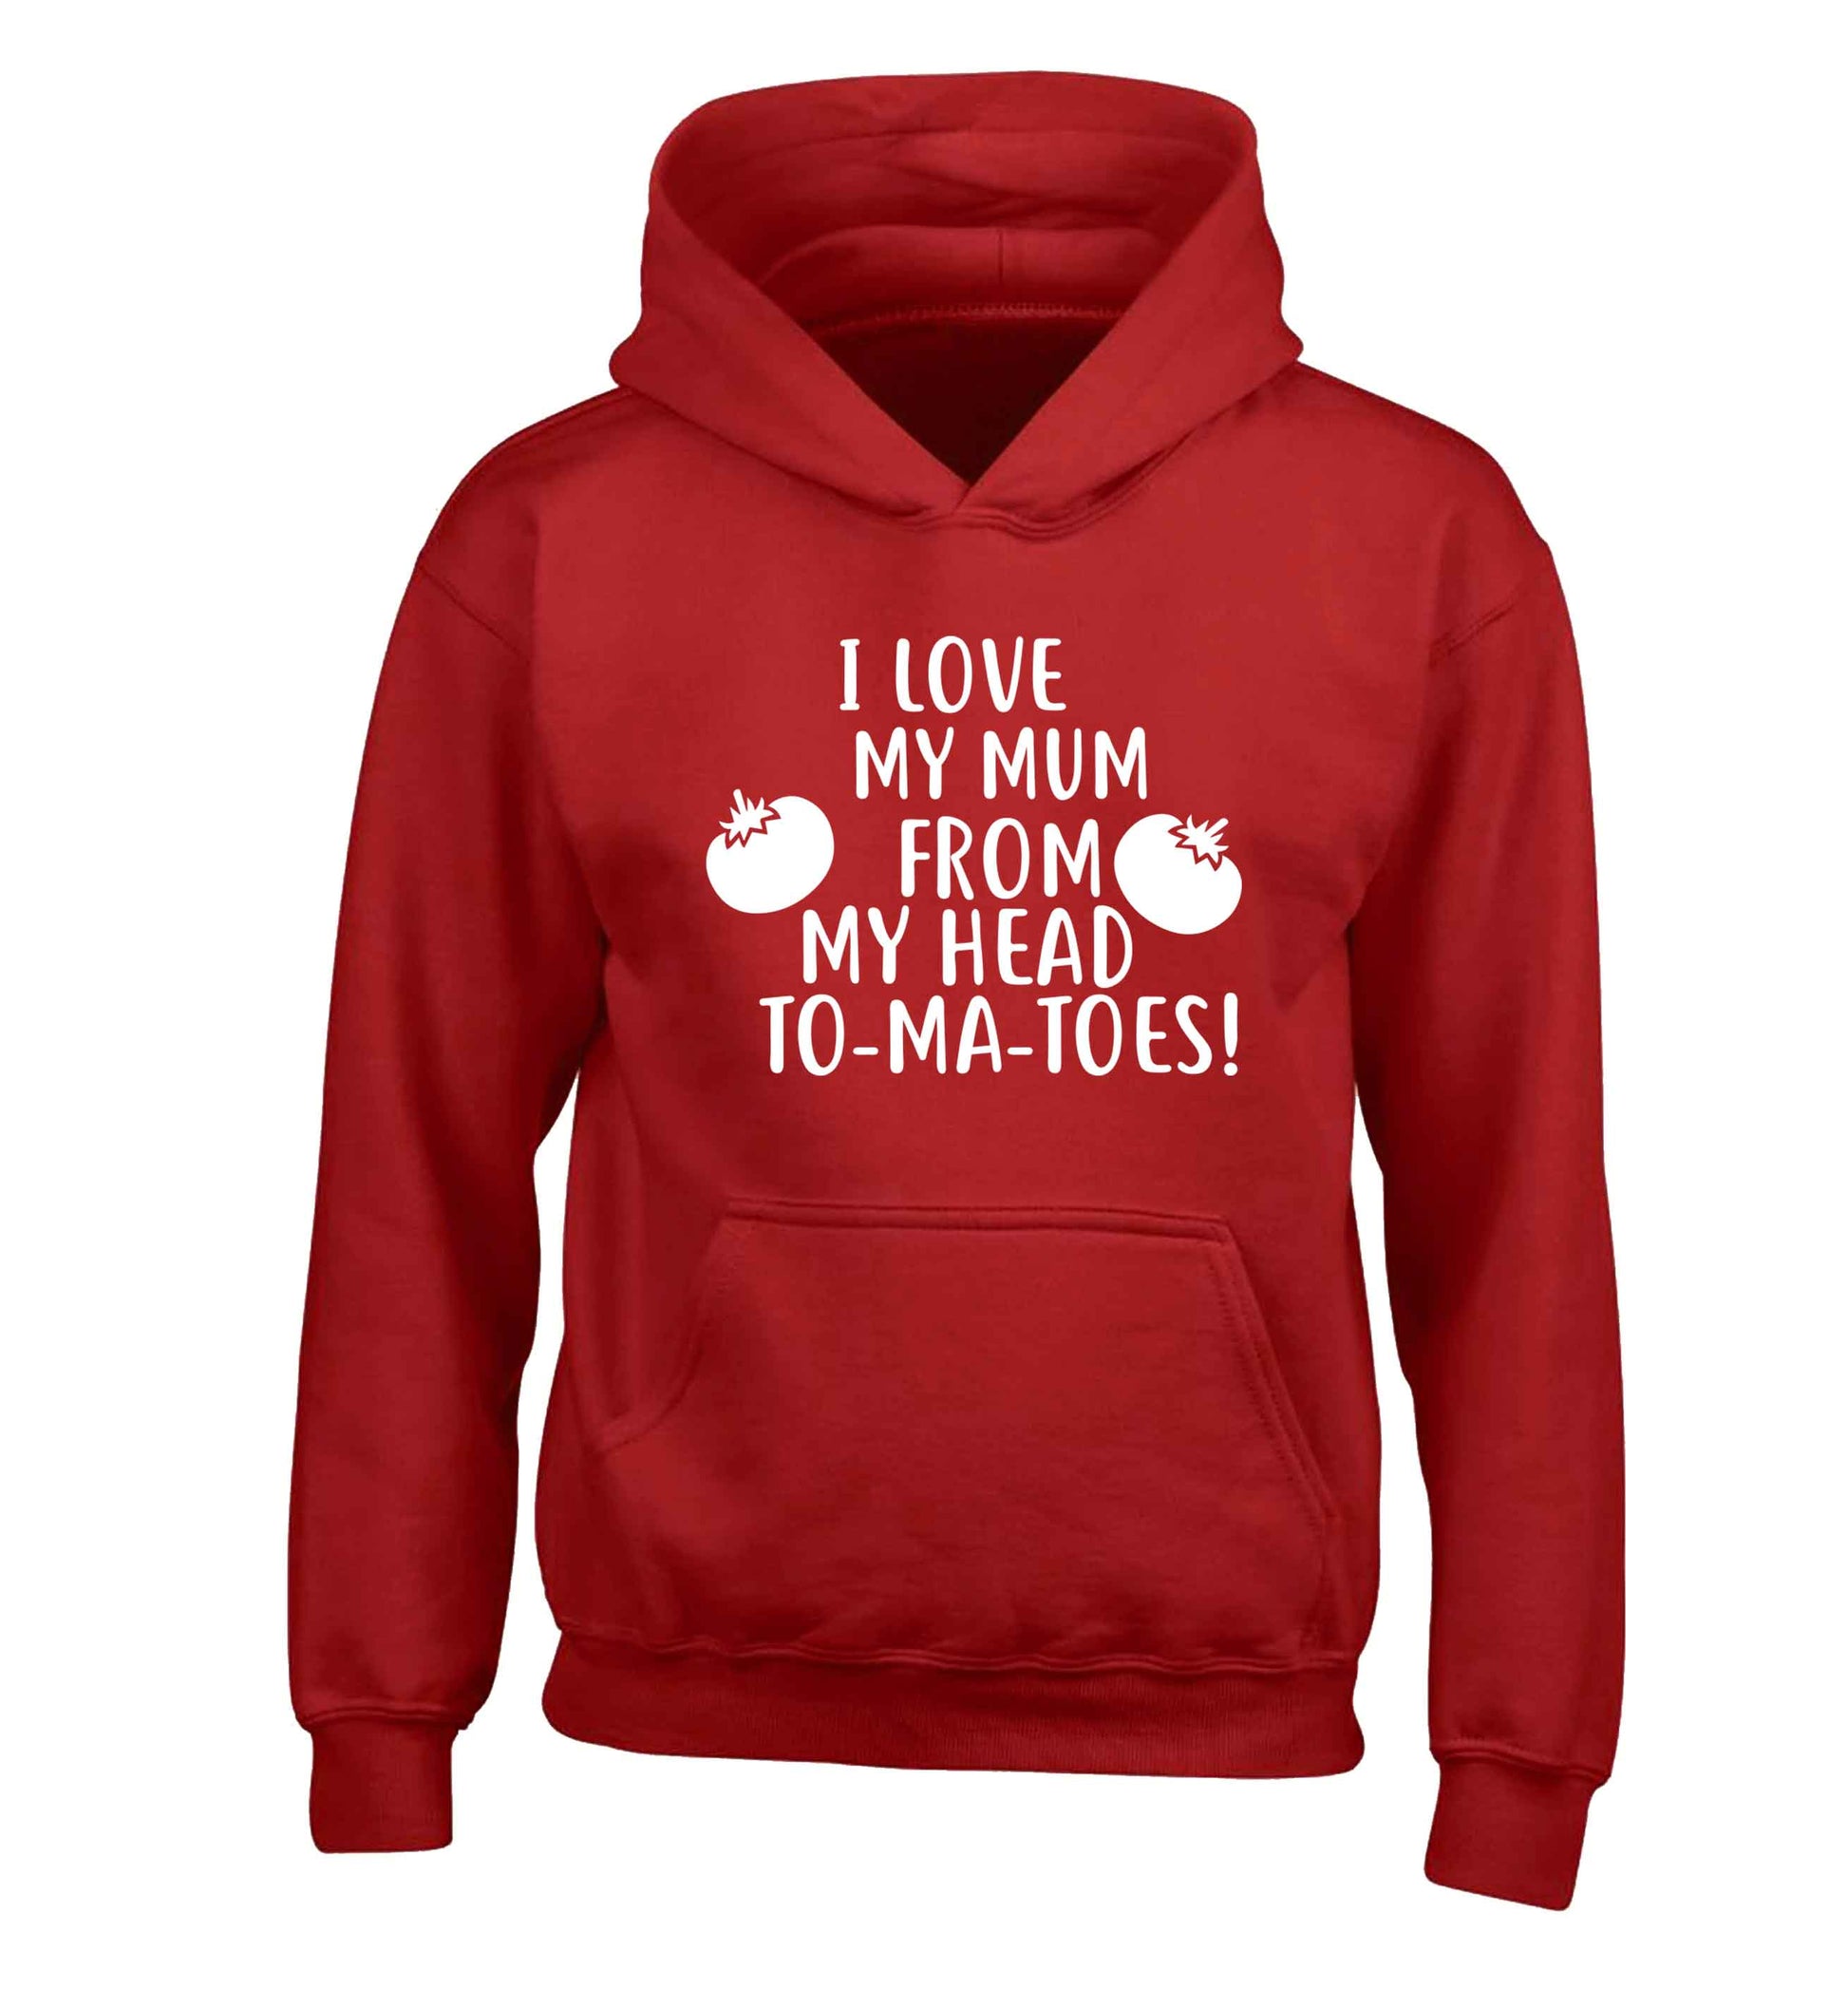 I love my mum from my head to-my-toes! children's red hoodie 12-13 Years